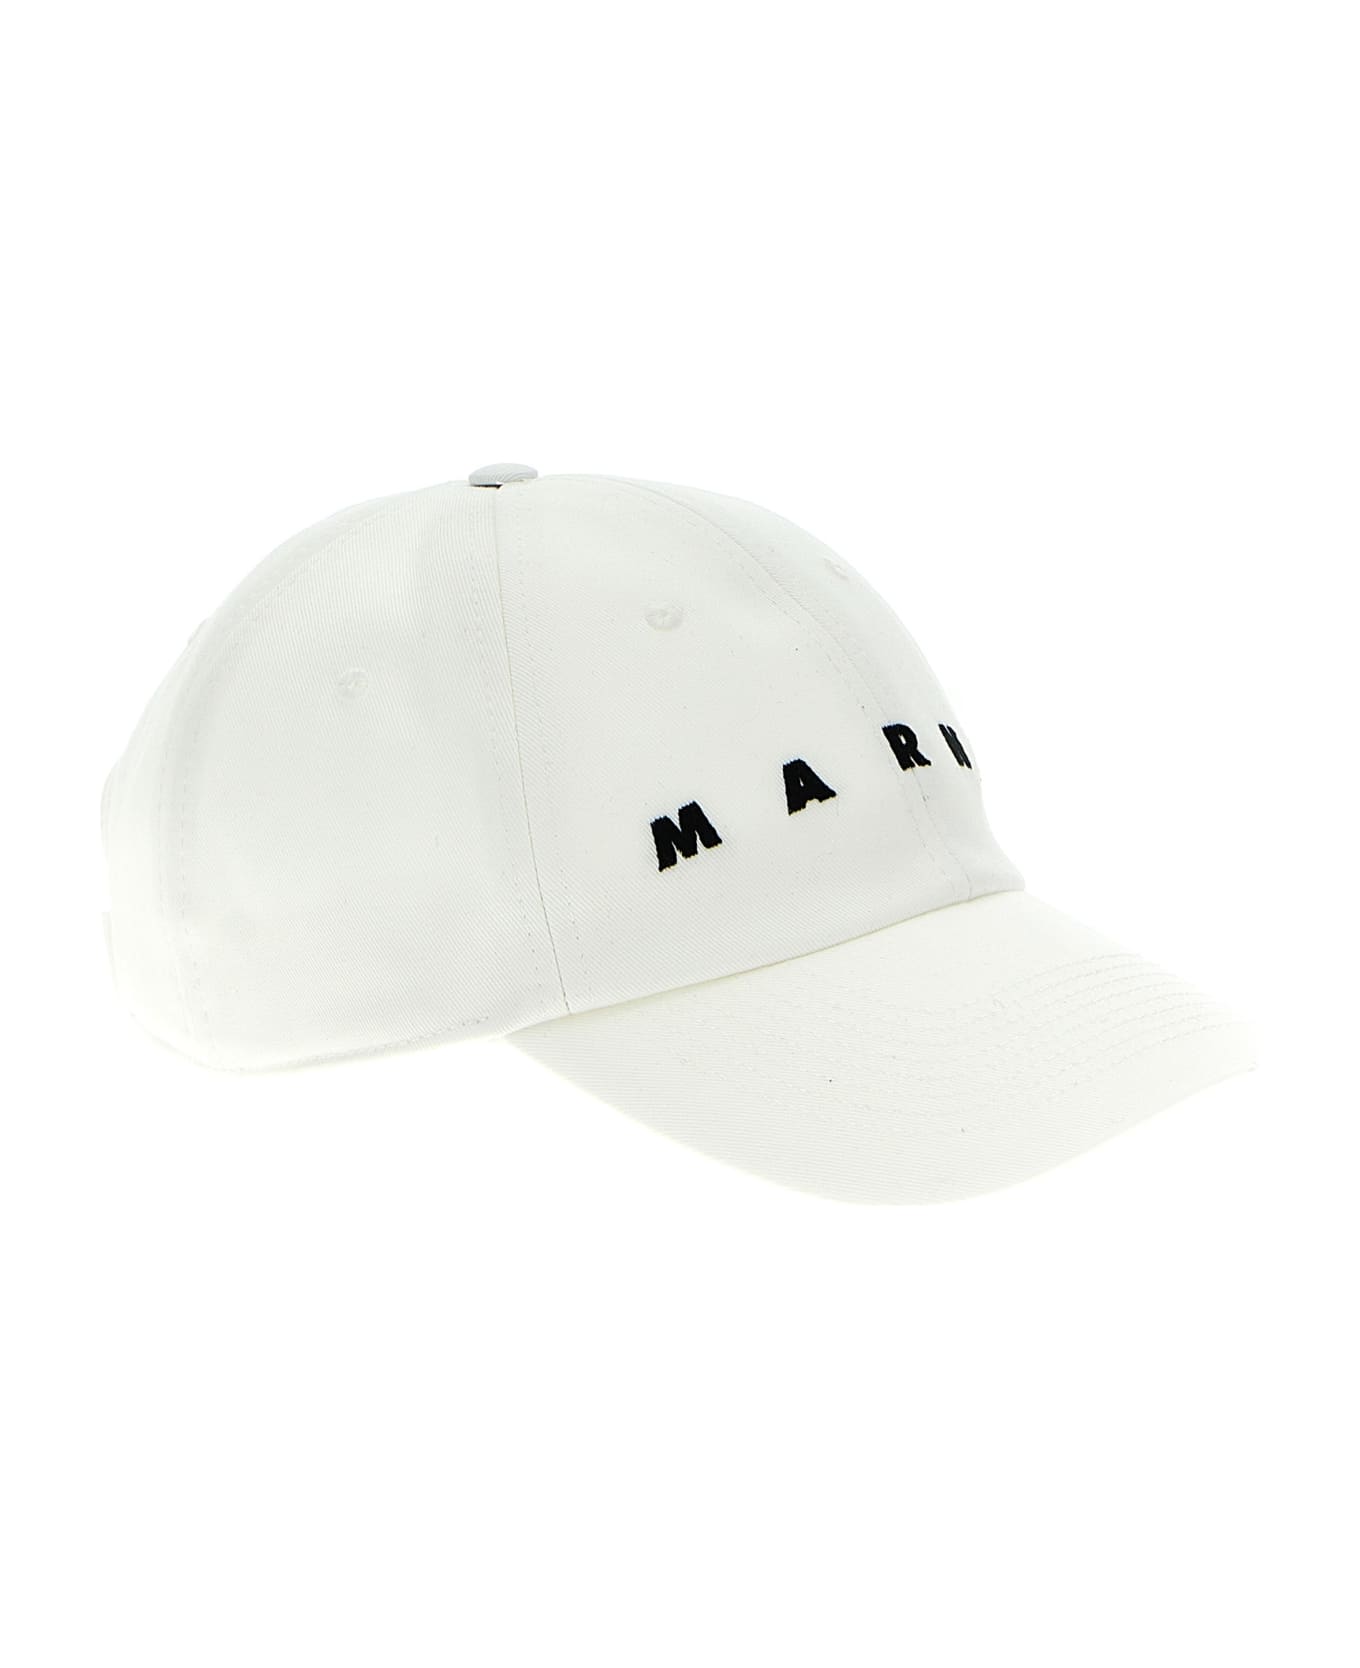 Marni Logo Embroidery Cap - White